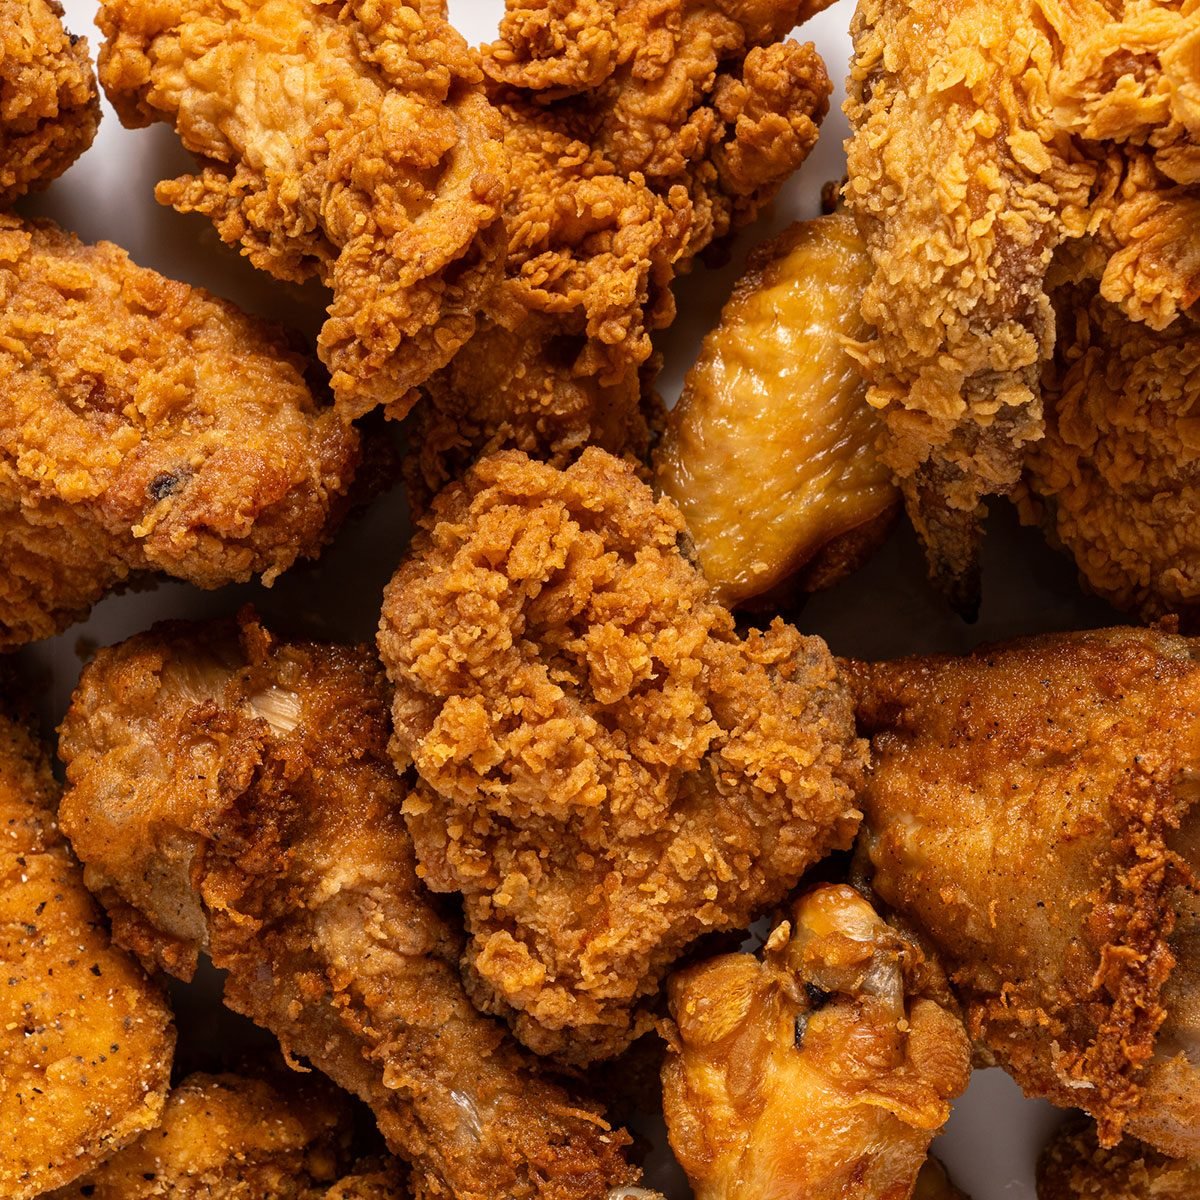 https://www.tasteofhome.com/wp-content/uploads/2023/09/The-Best-Fast-Food-Fried-Chicken-Ranked_Kristina-Va%CC%88nni-for-Taste-of-Home_Fried-Chicken-Group-Hero-Shot_FT.jpg?fit=700%2C700